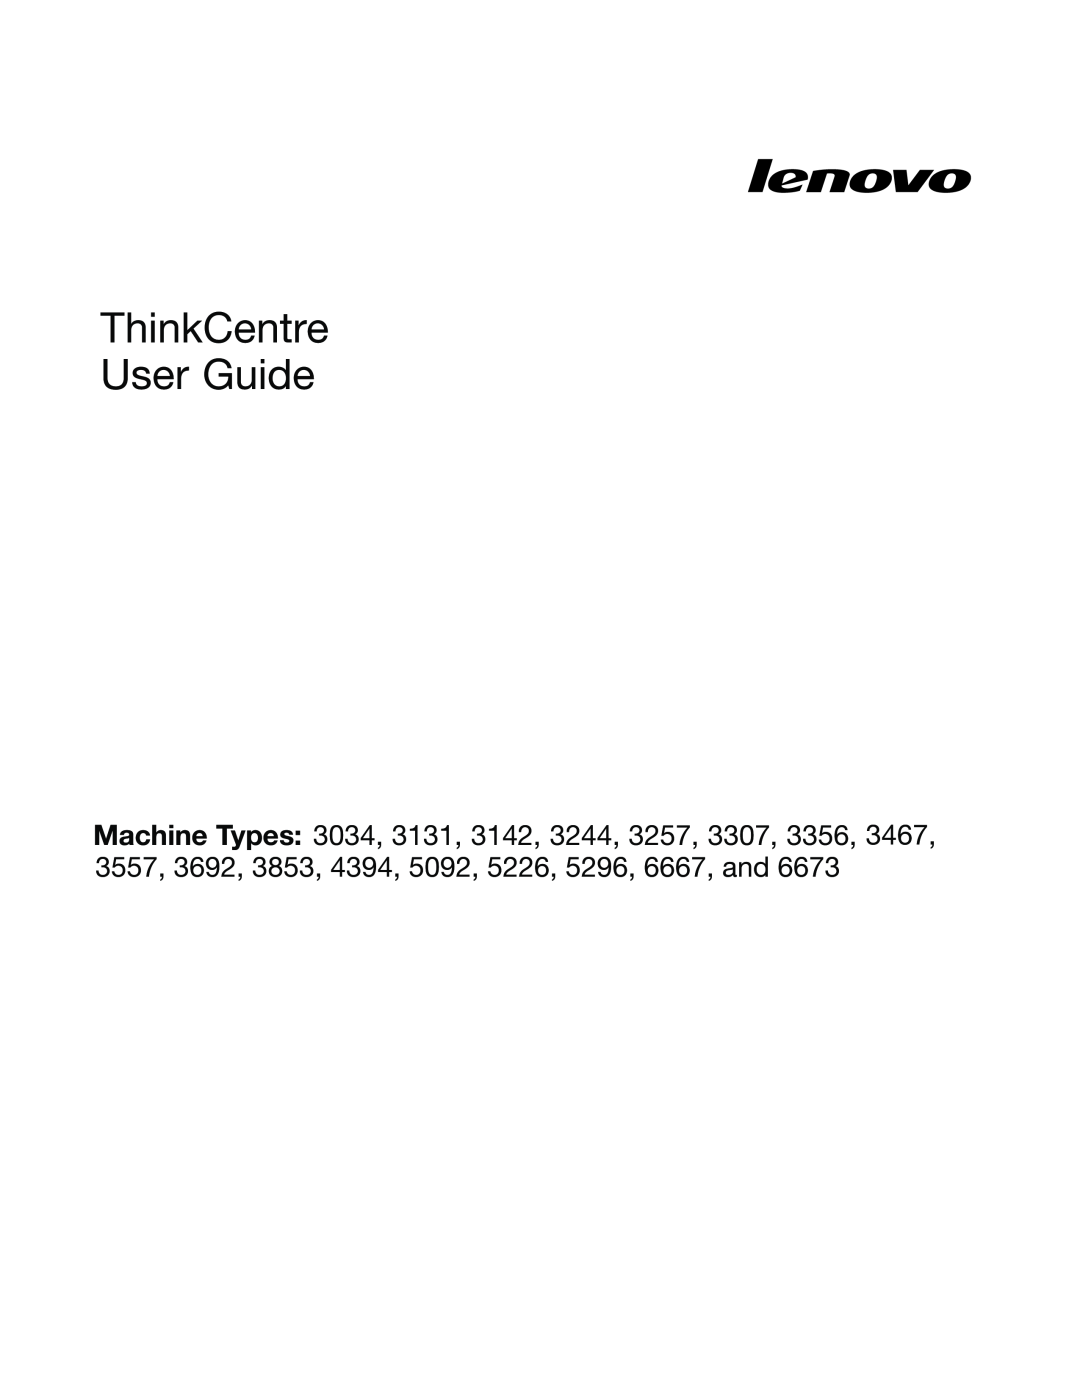 Lenovo 5226, 3034, 6667, 5092, 4394, 3853, 3692, 3557, 3467, 3356, 3307, 3142, 3257, 3131, 3244 manual ThinkCentre User Guide 